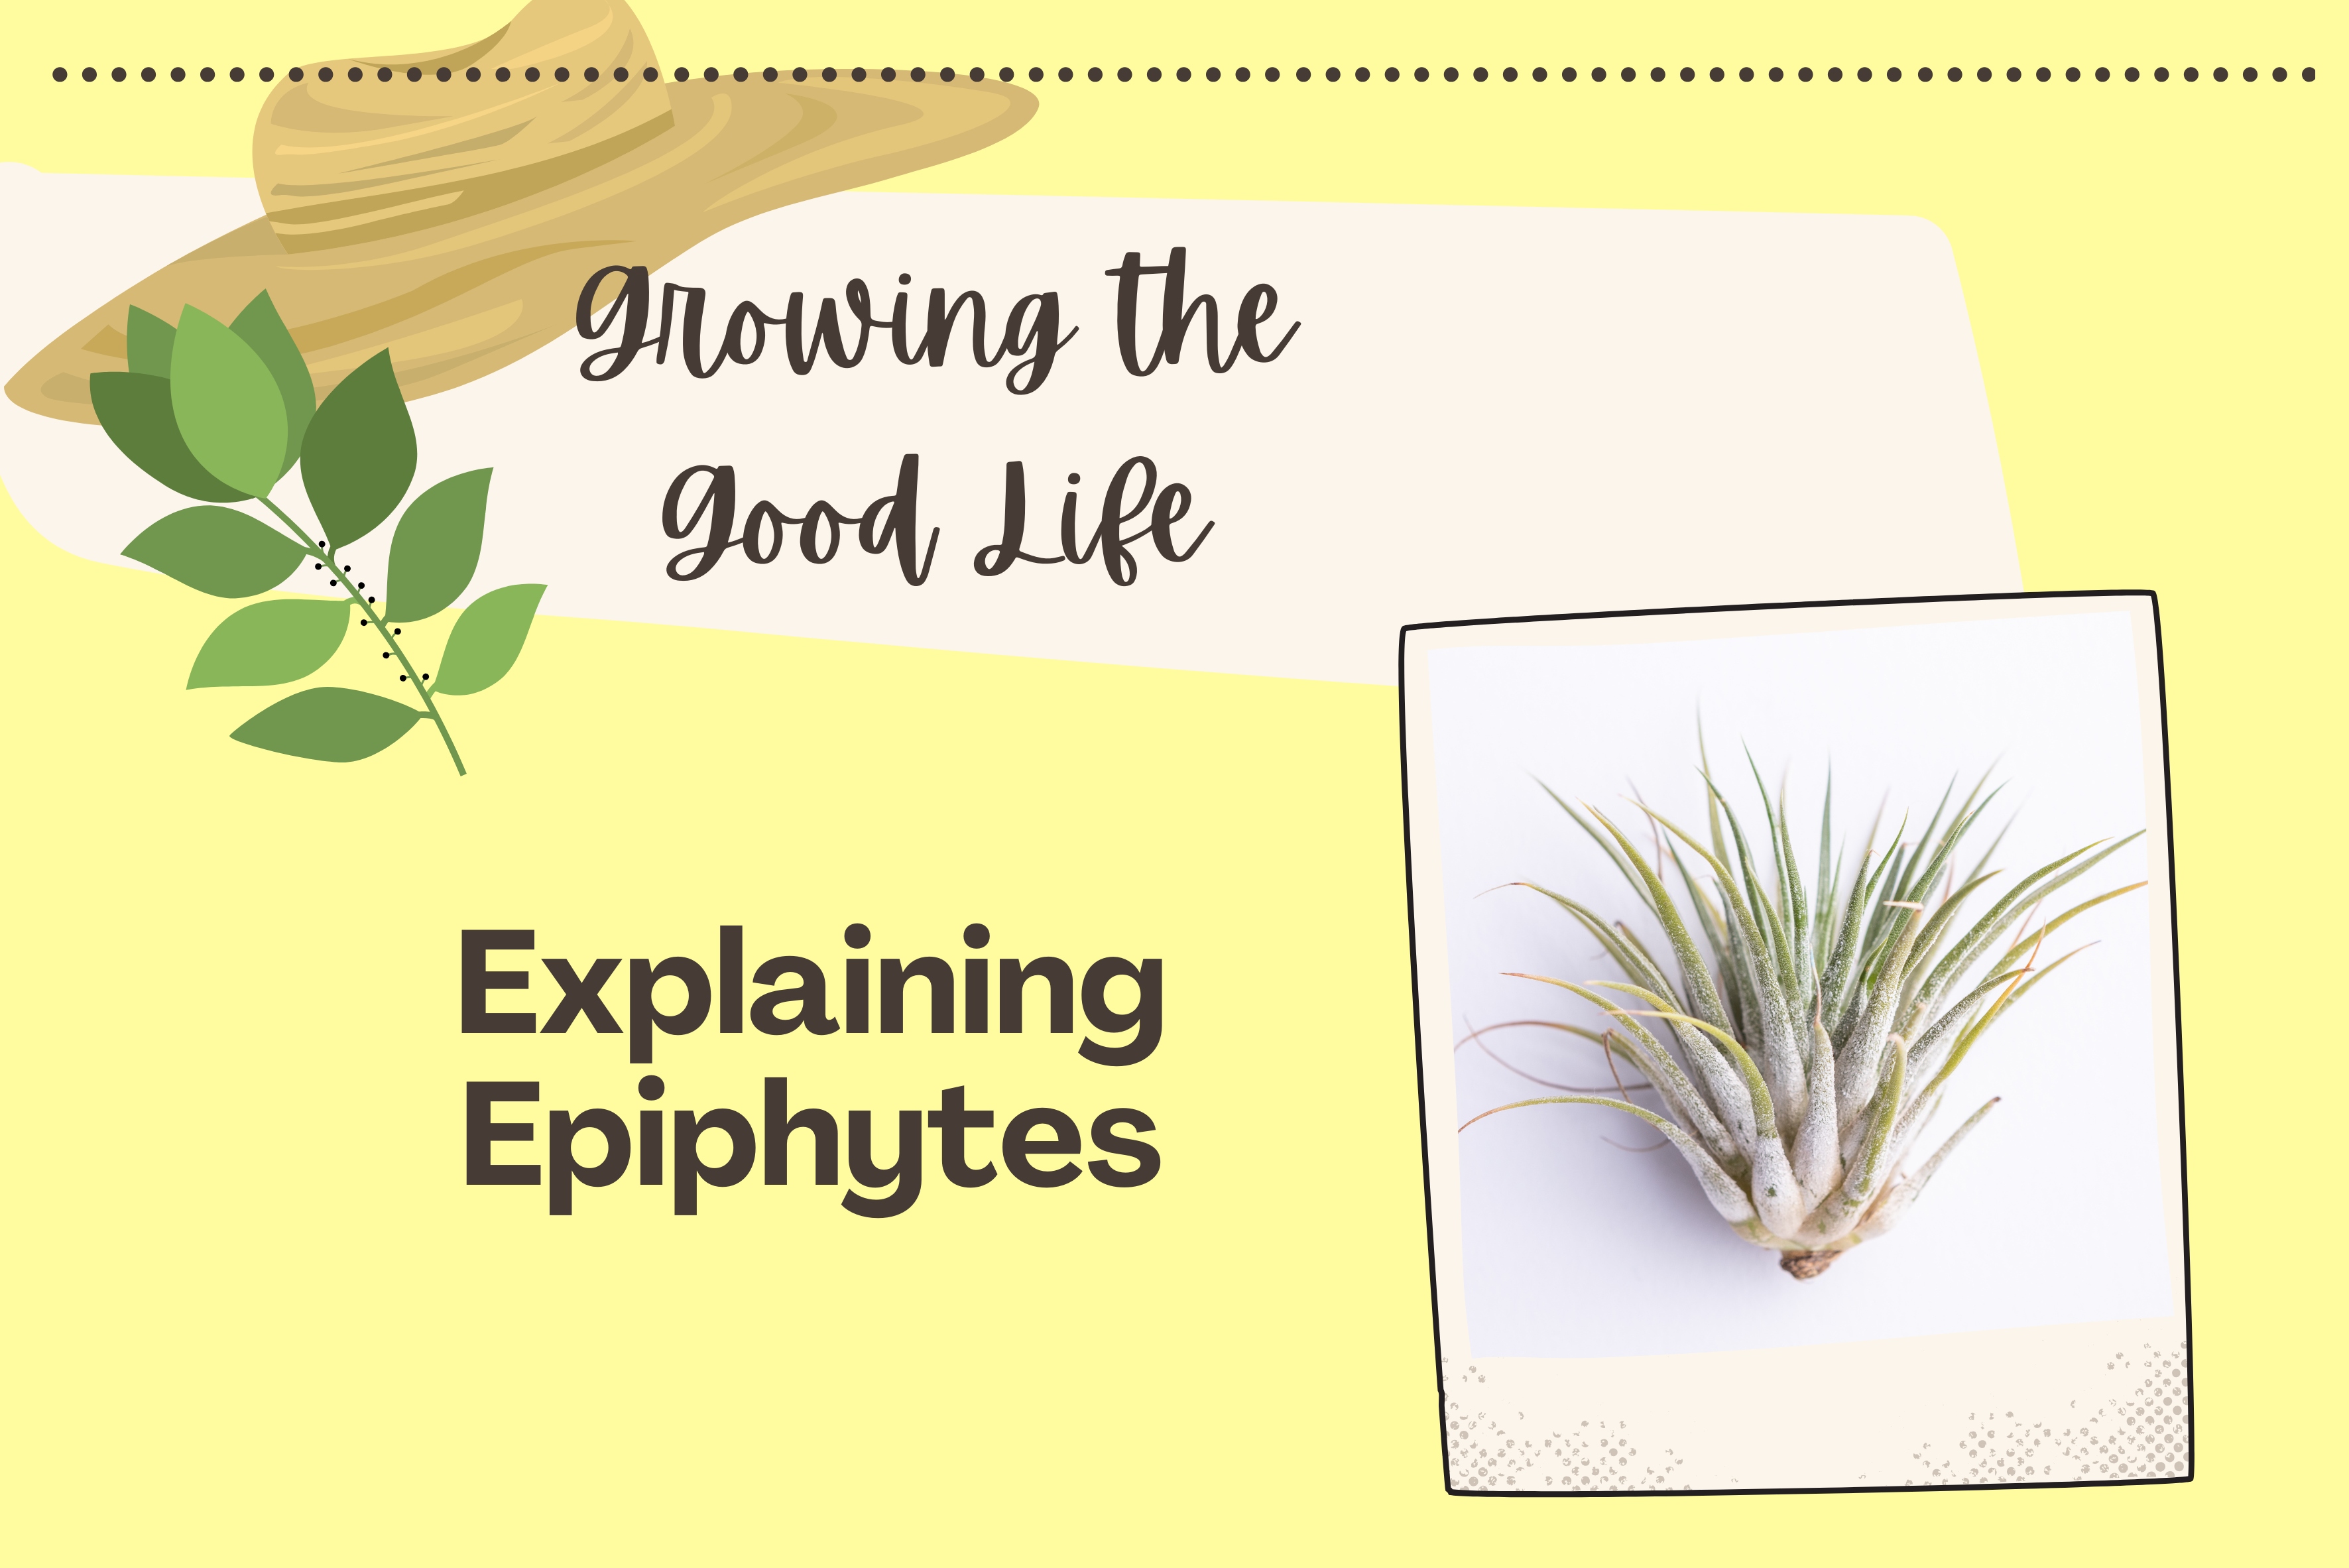 Epiphytes